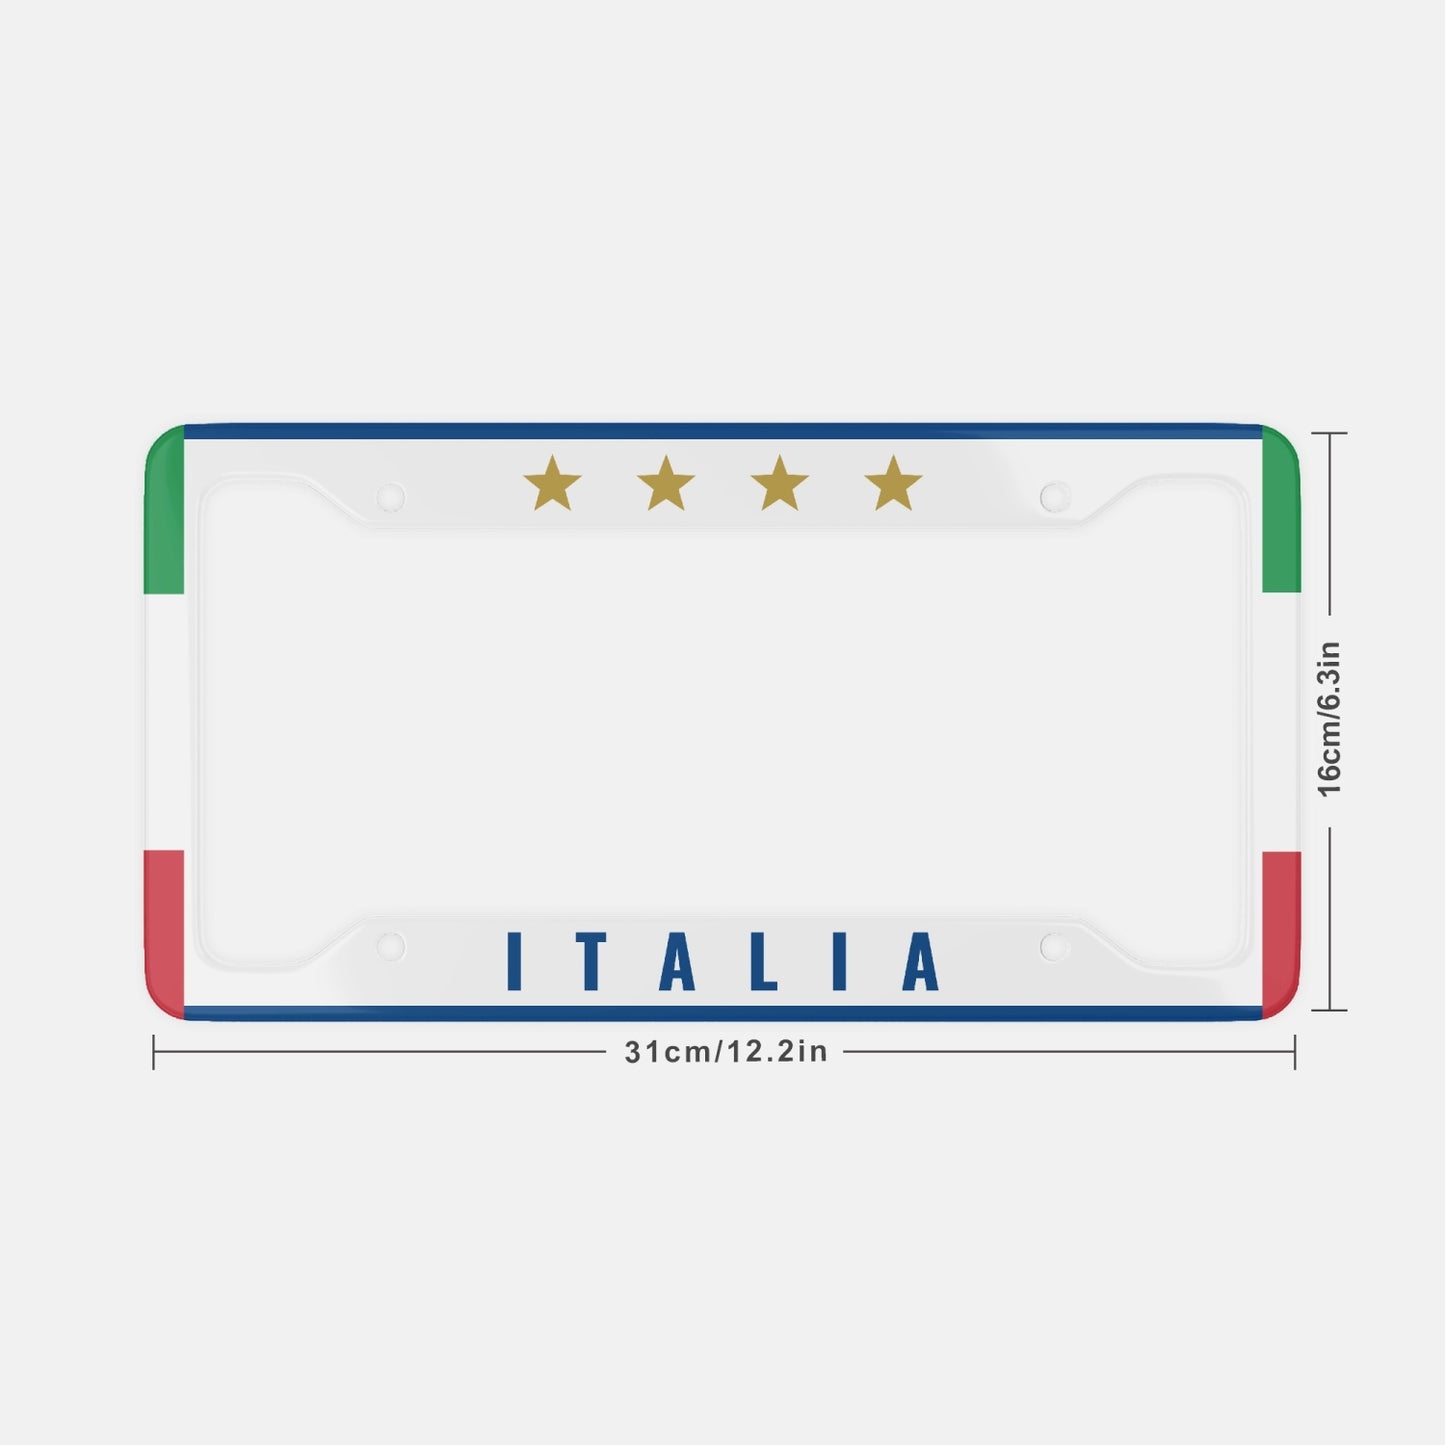 Italy 4 Stars - License Plate Frame